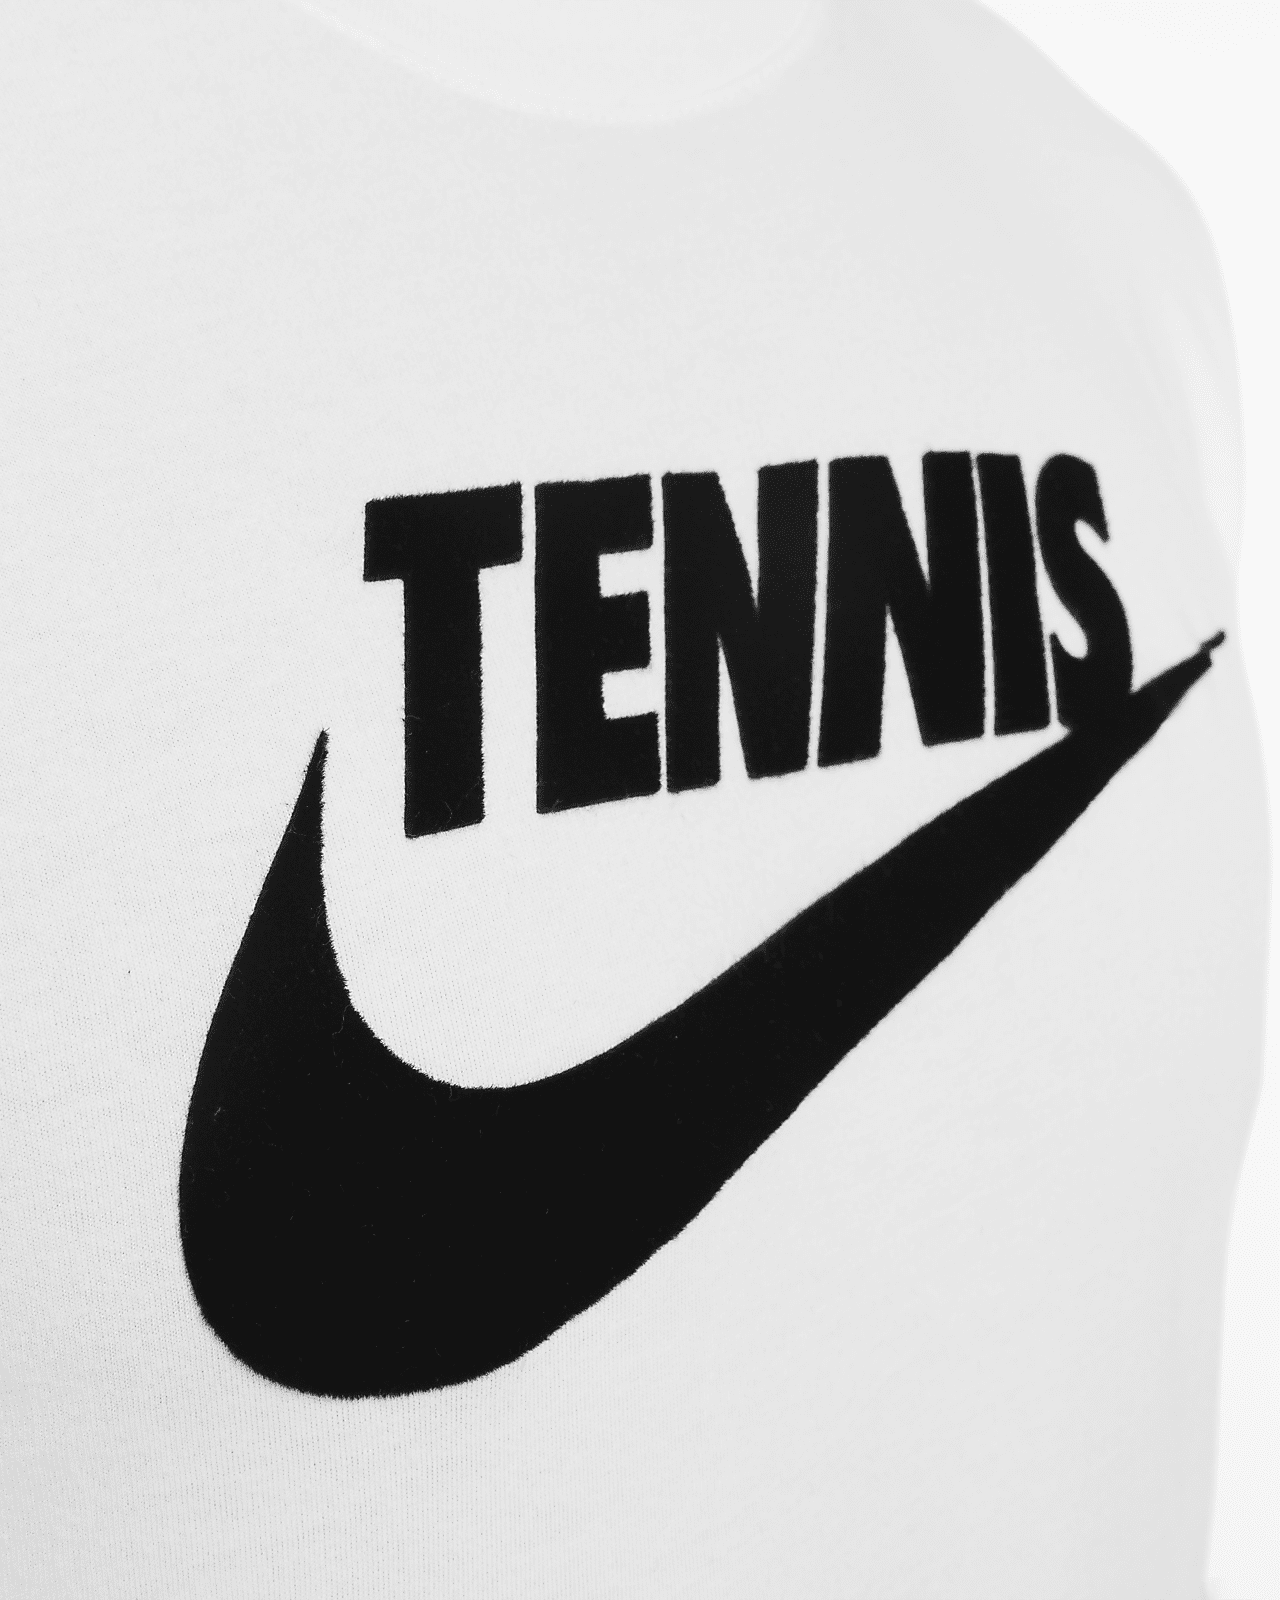 NikeCourt Dri-FIT Men's Graphic Tennis T-Shirt. Nike LU